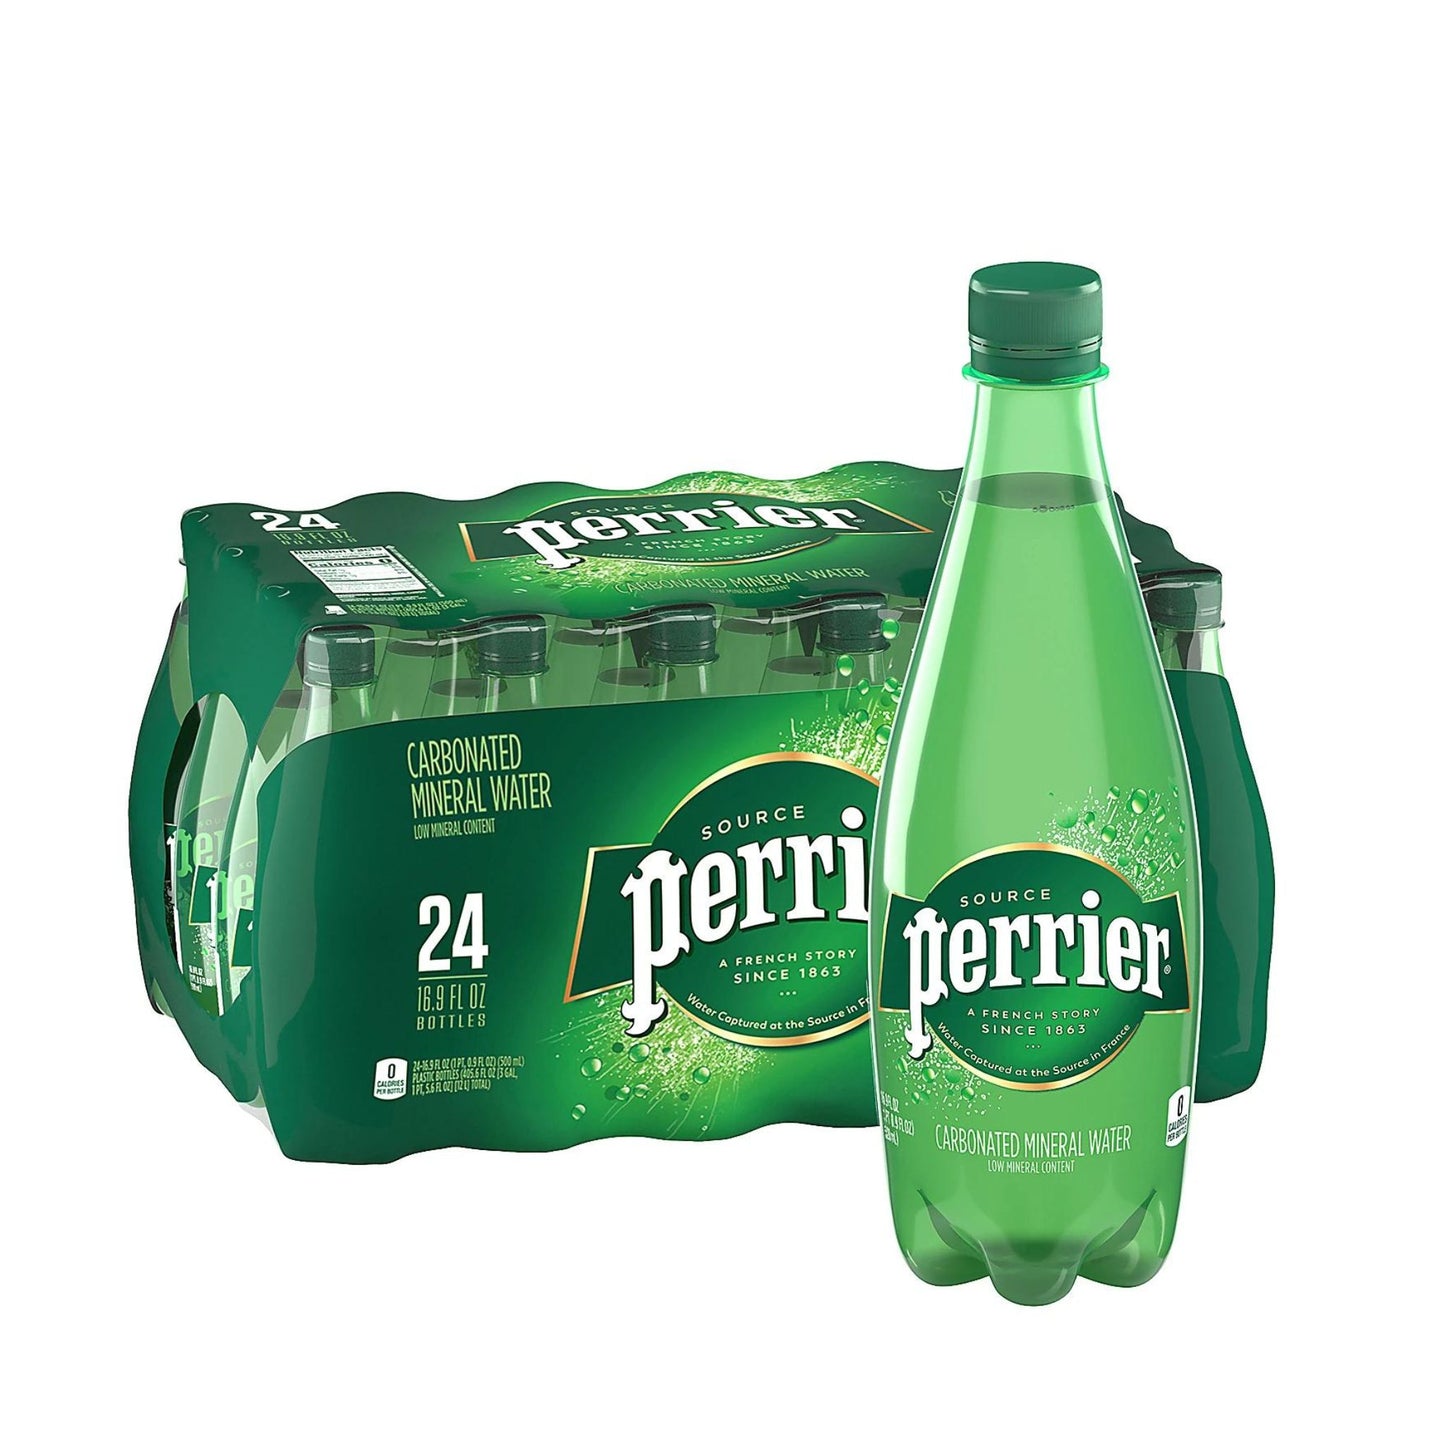 Perrier Sparkling Natural Mineral Water 16.9 Oz. Case of 24 Bottles